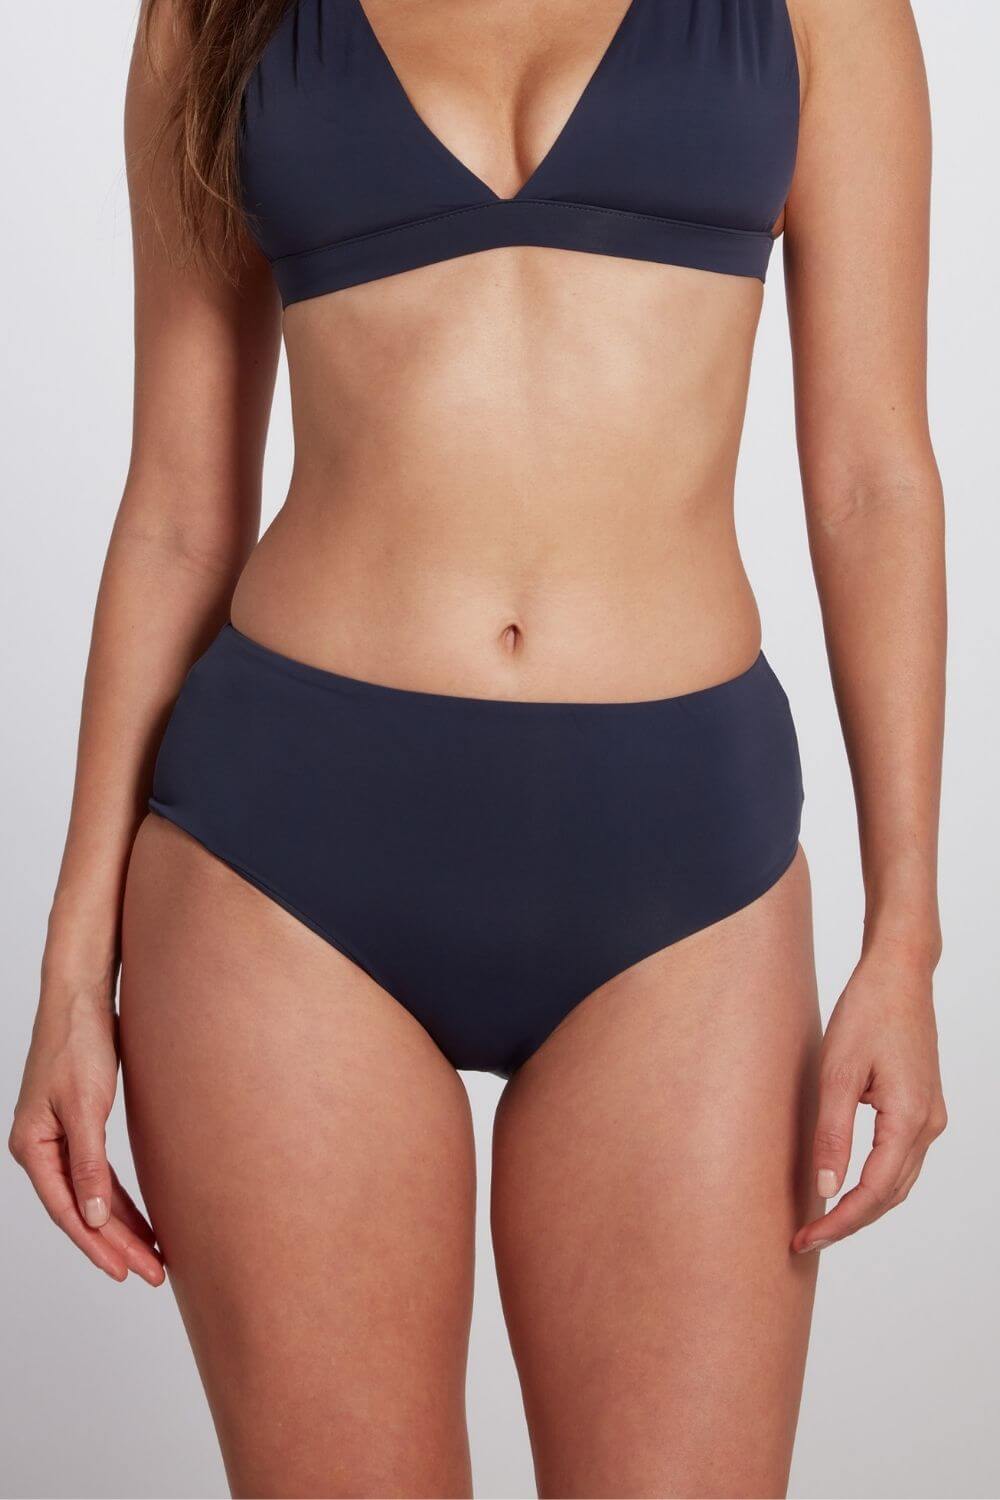 Mid-rise hipster bikini bottom in navy blue.